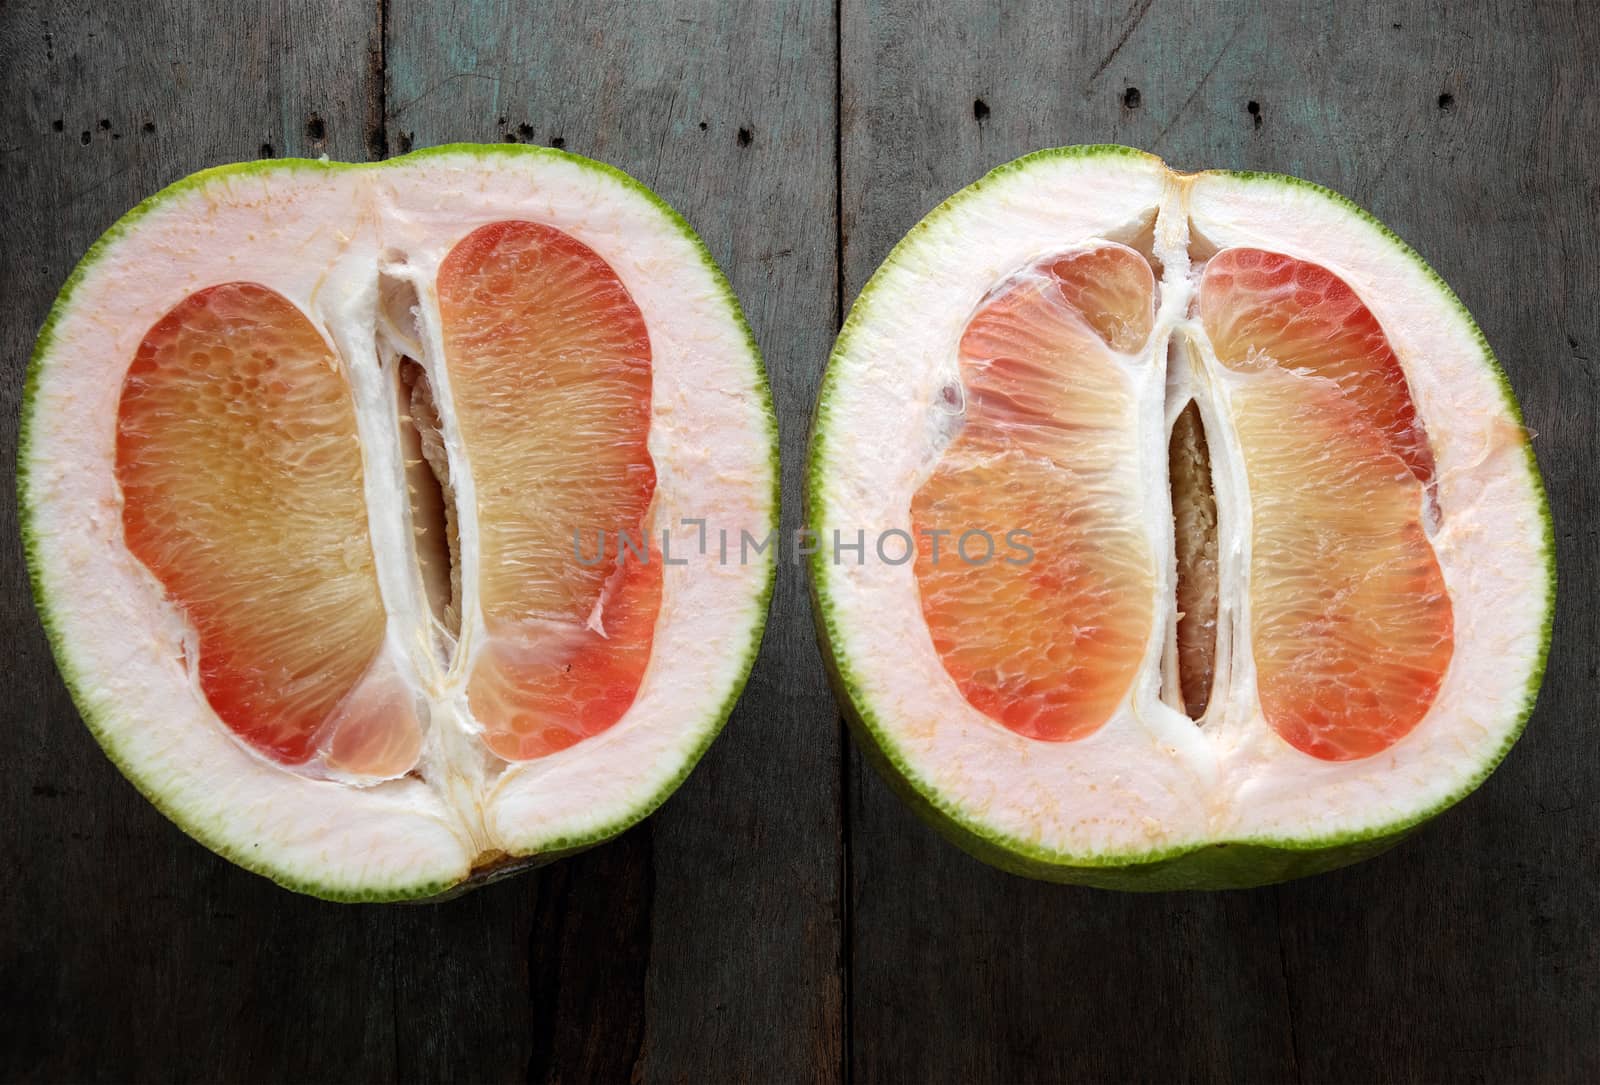 Grapefruit on wood background, tropical fruit by xuanhuongho